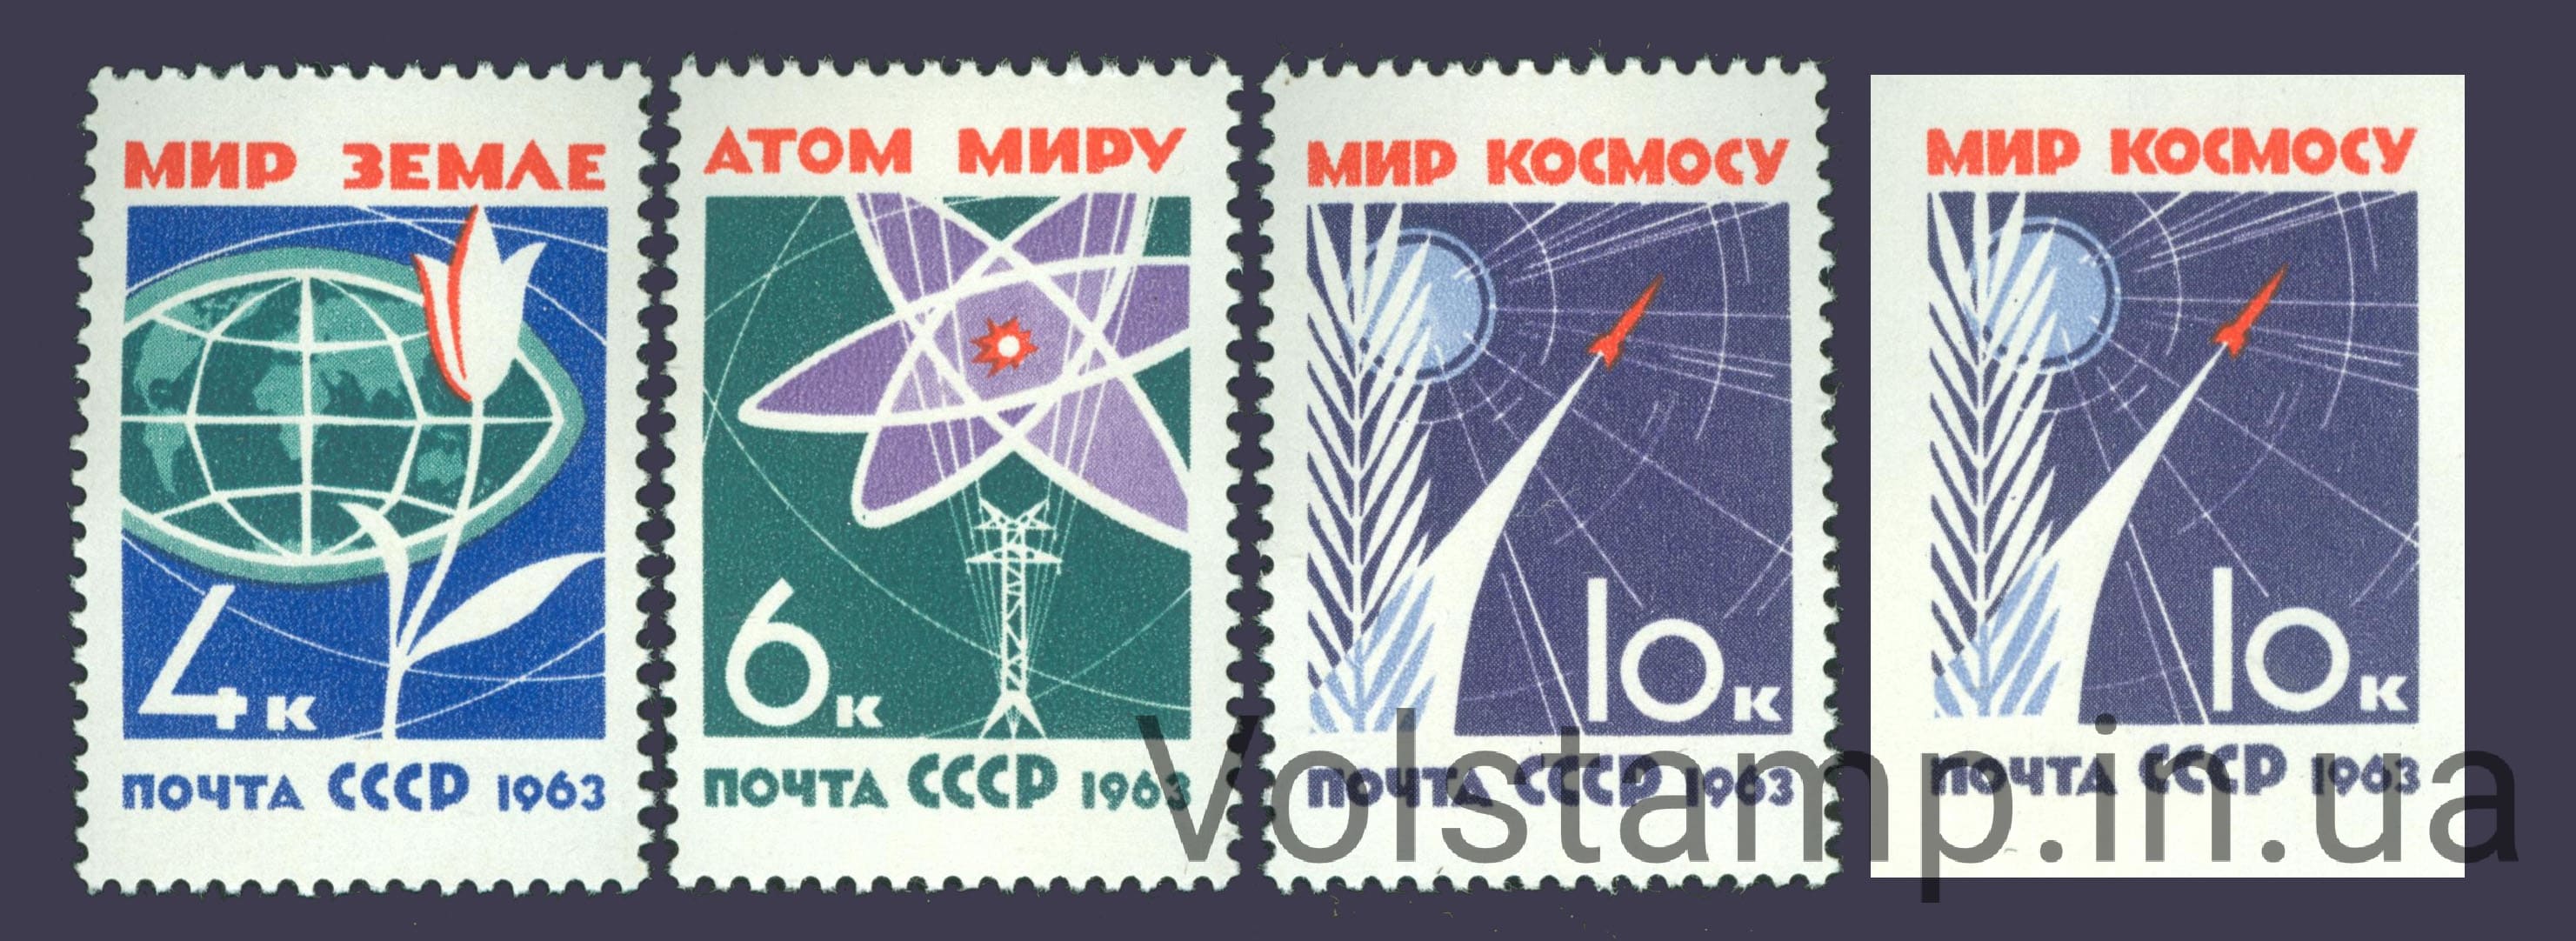 1963 серия марок За мир без оружия, мир без войн №2742-2745